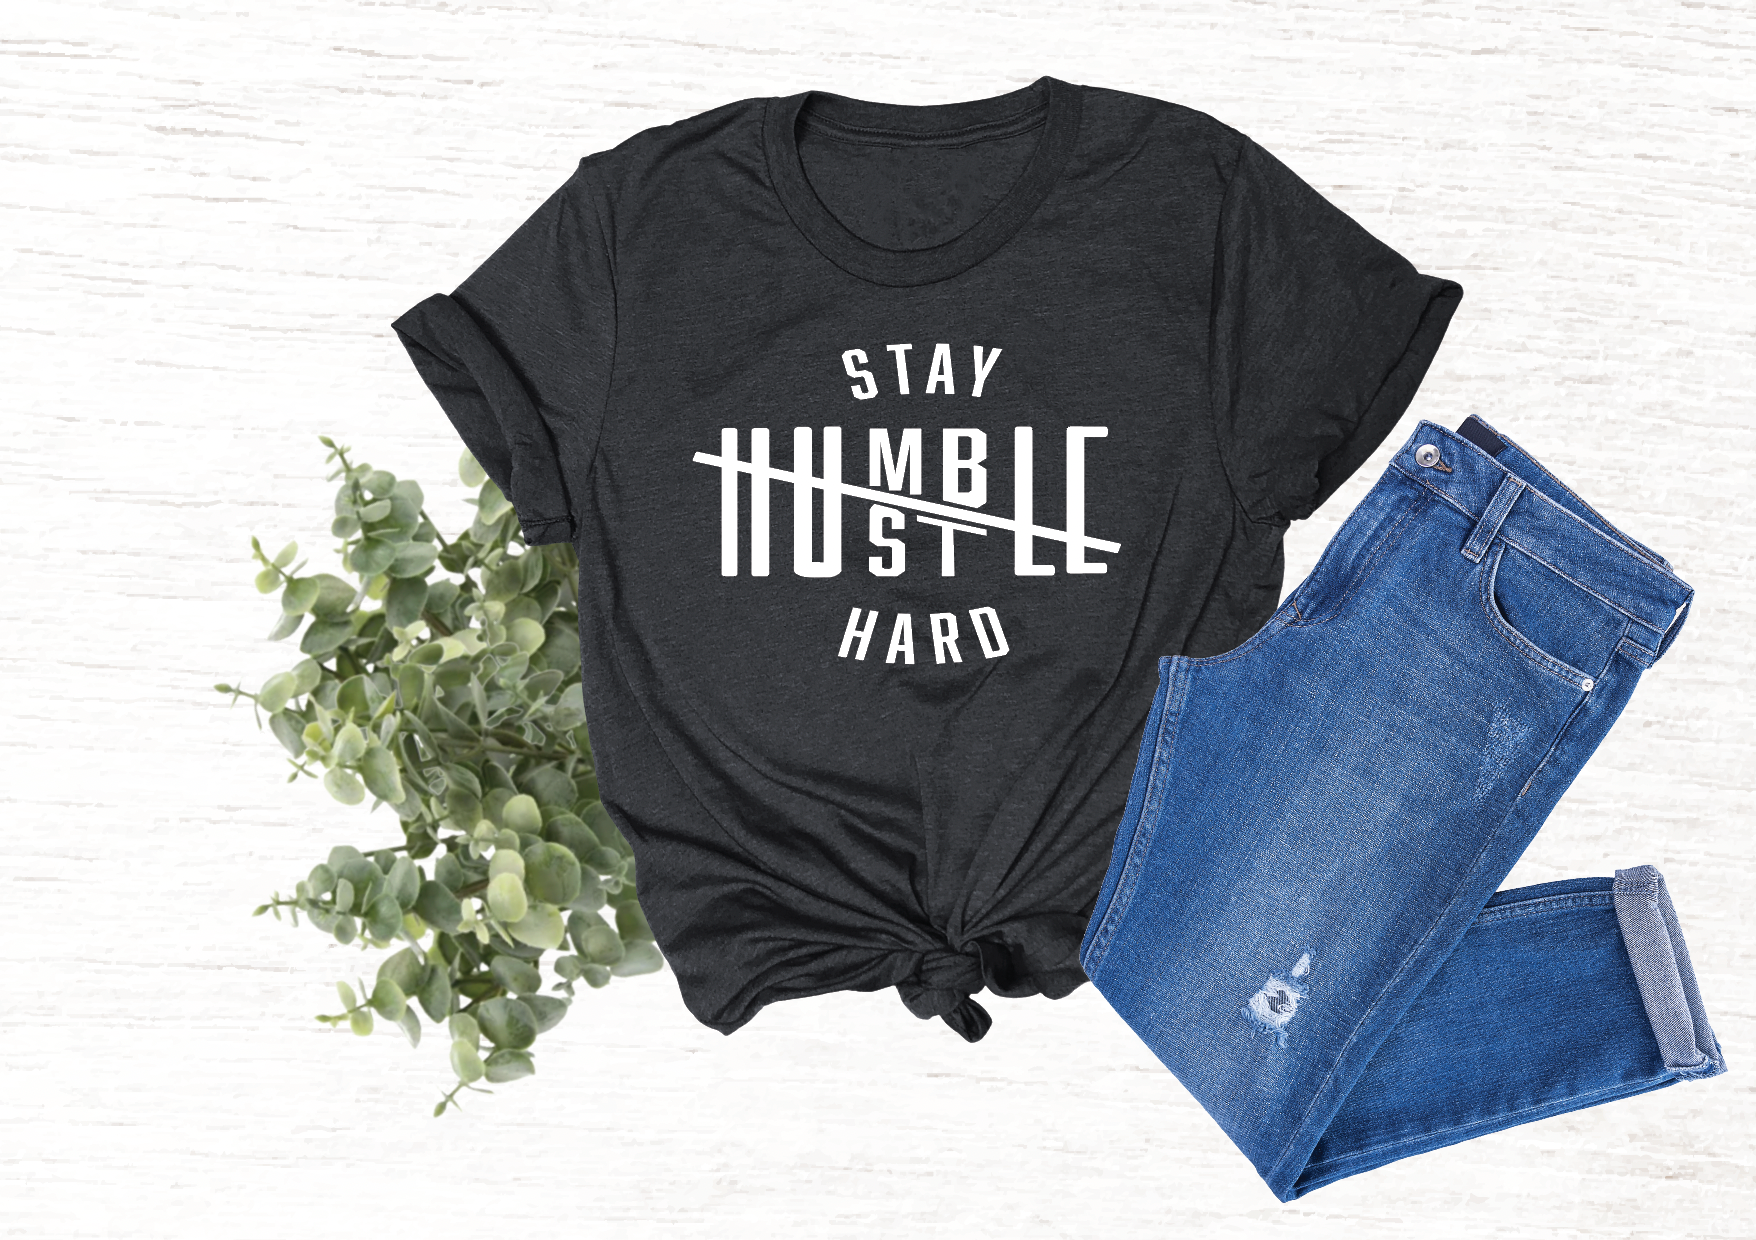 Stay Humble Hustle Hard Youth T-Shirt